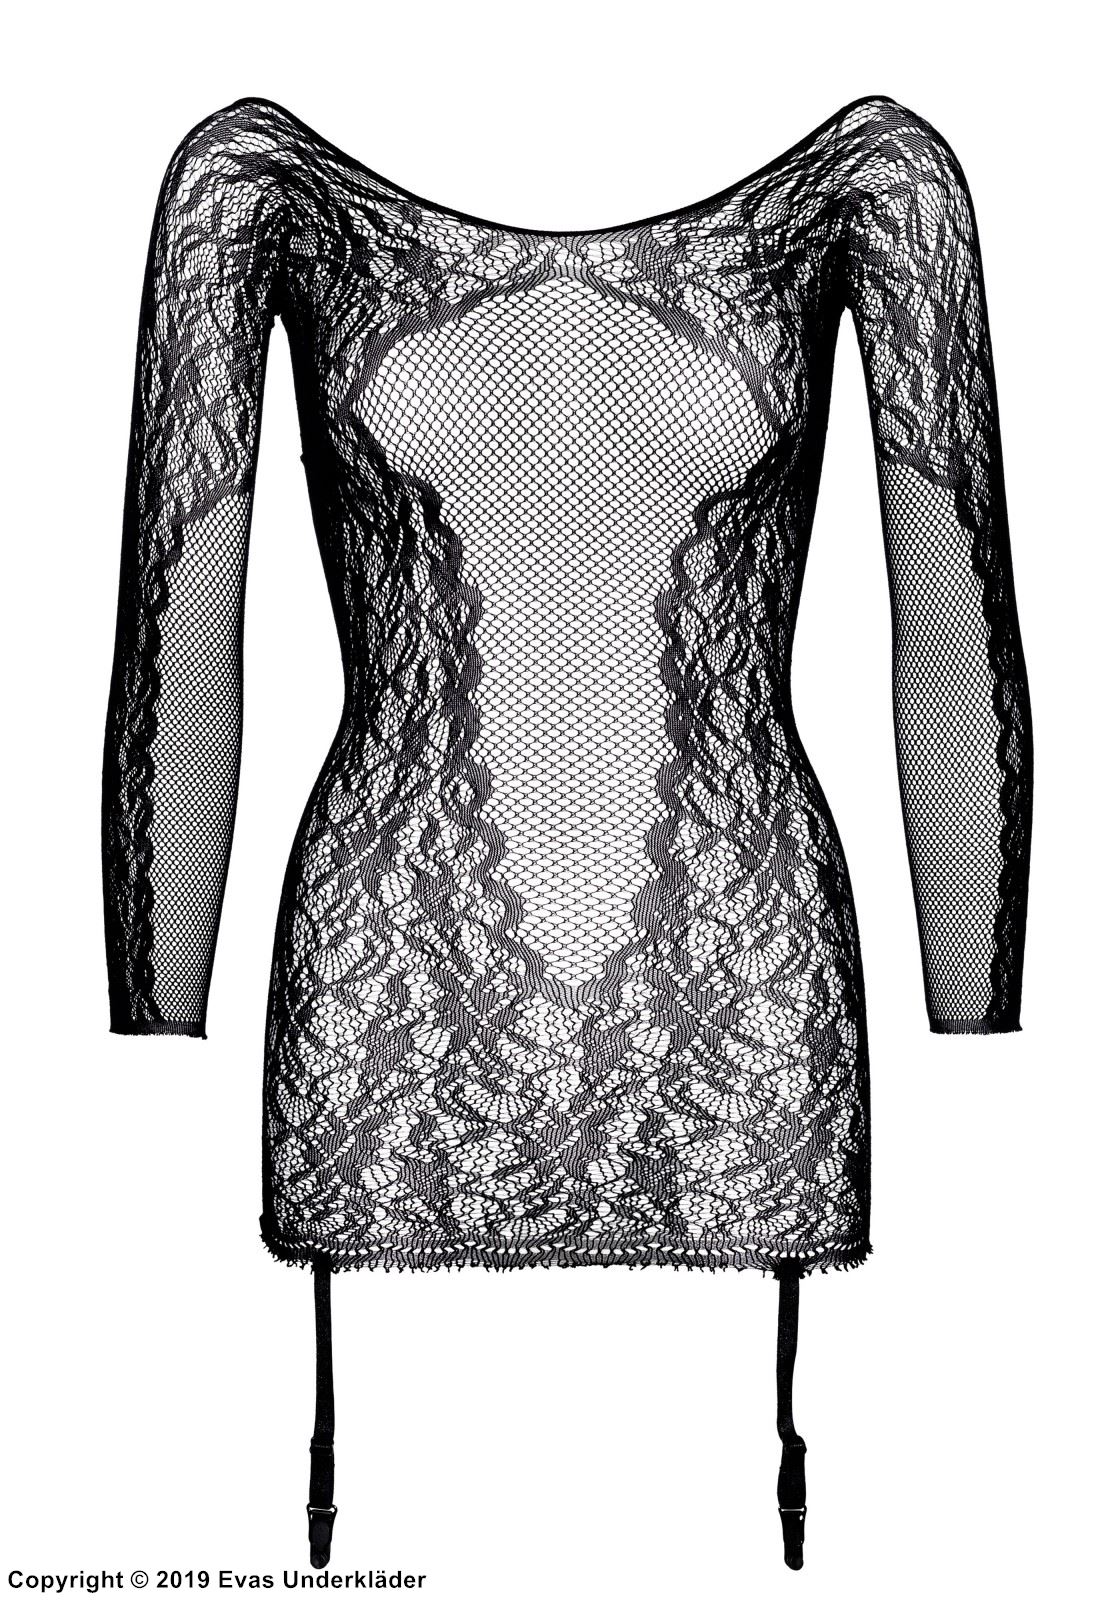 Night mini dress, net, floral lace, long sleeves, built-in garter belt strap